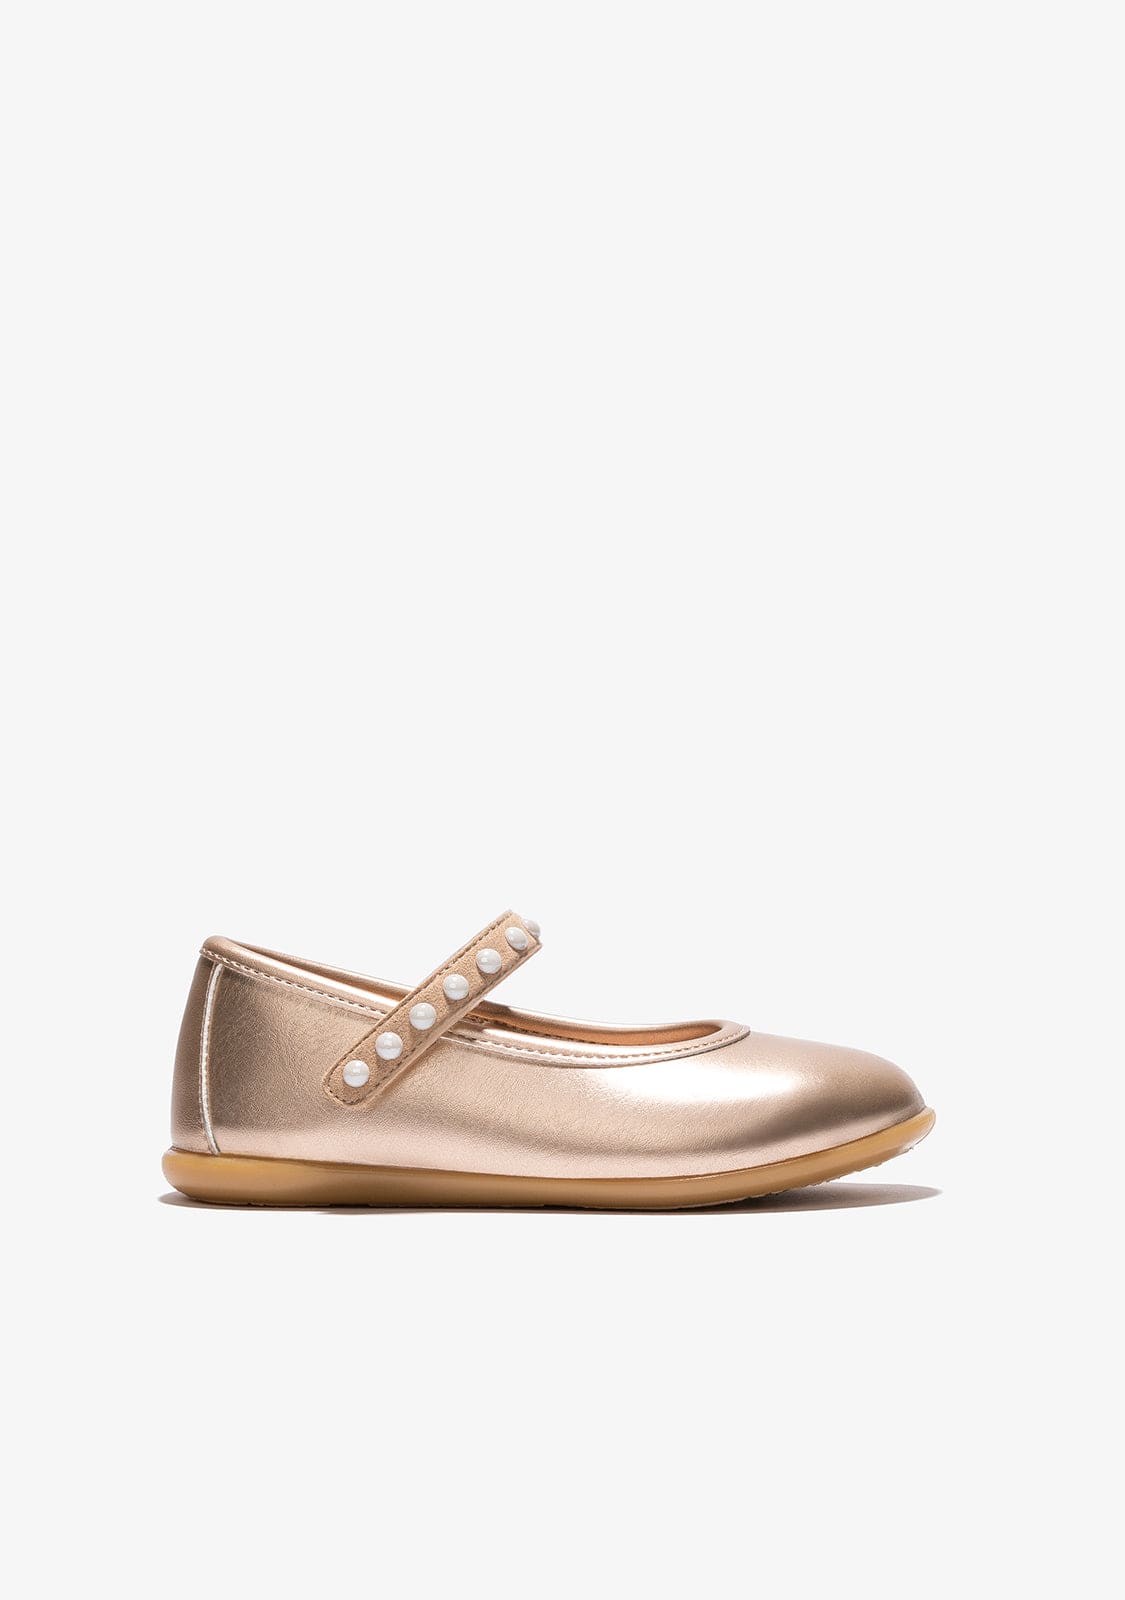 CONGUITOS Shoes Girl's Platinum Pearls Ballerinas Metallized